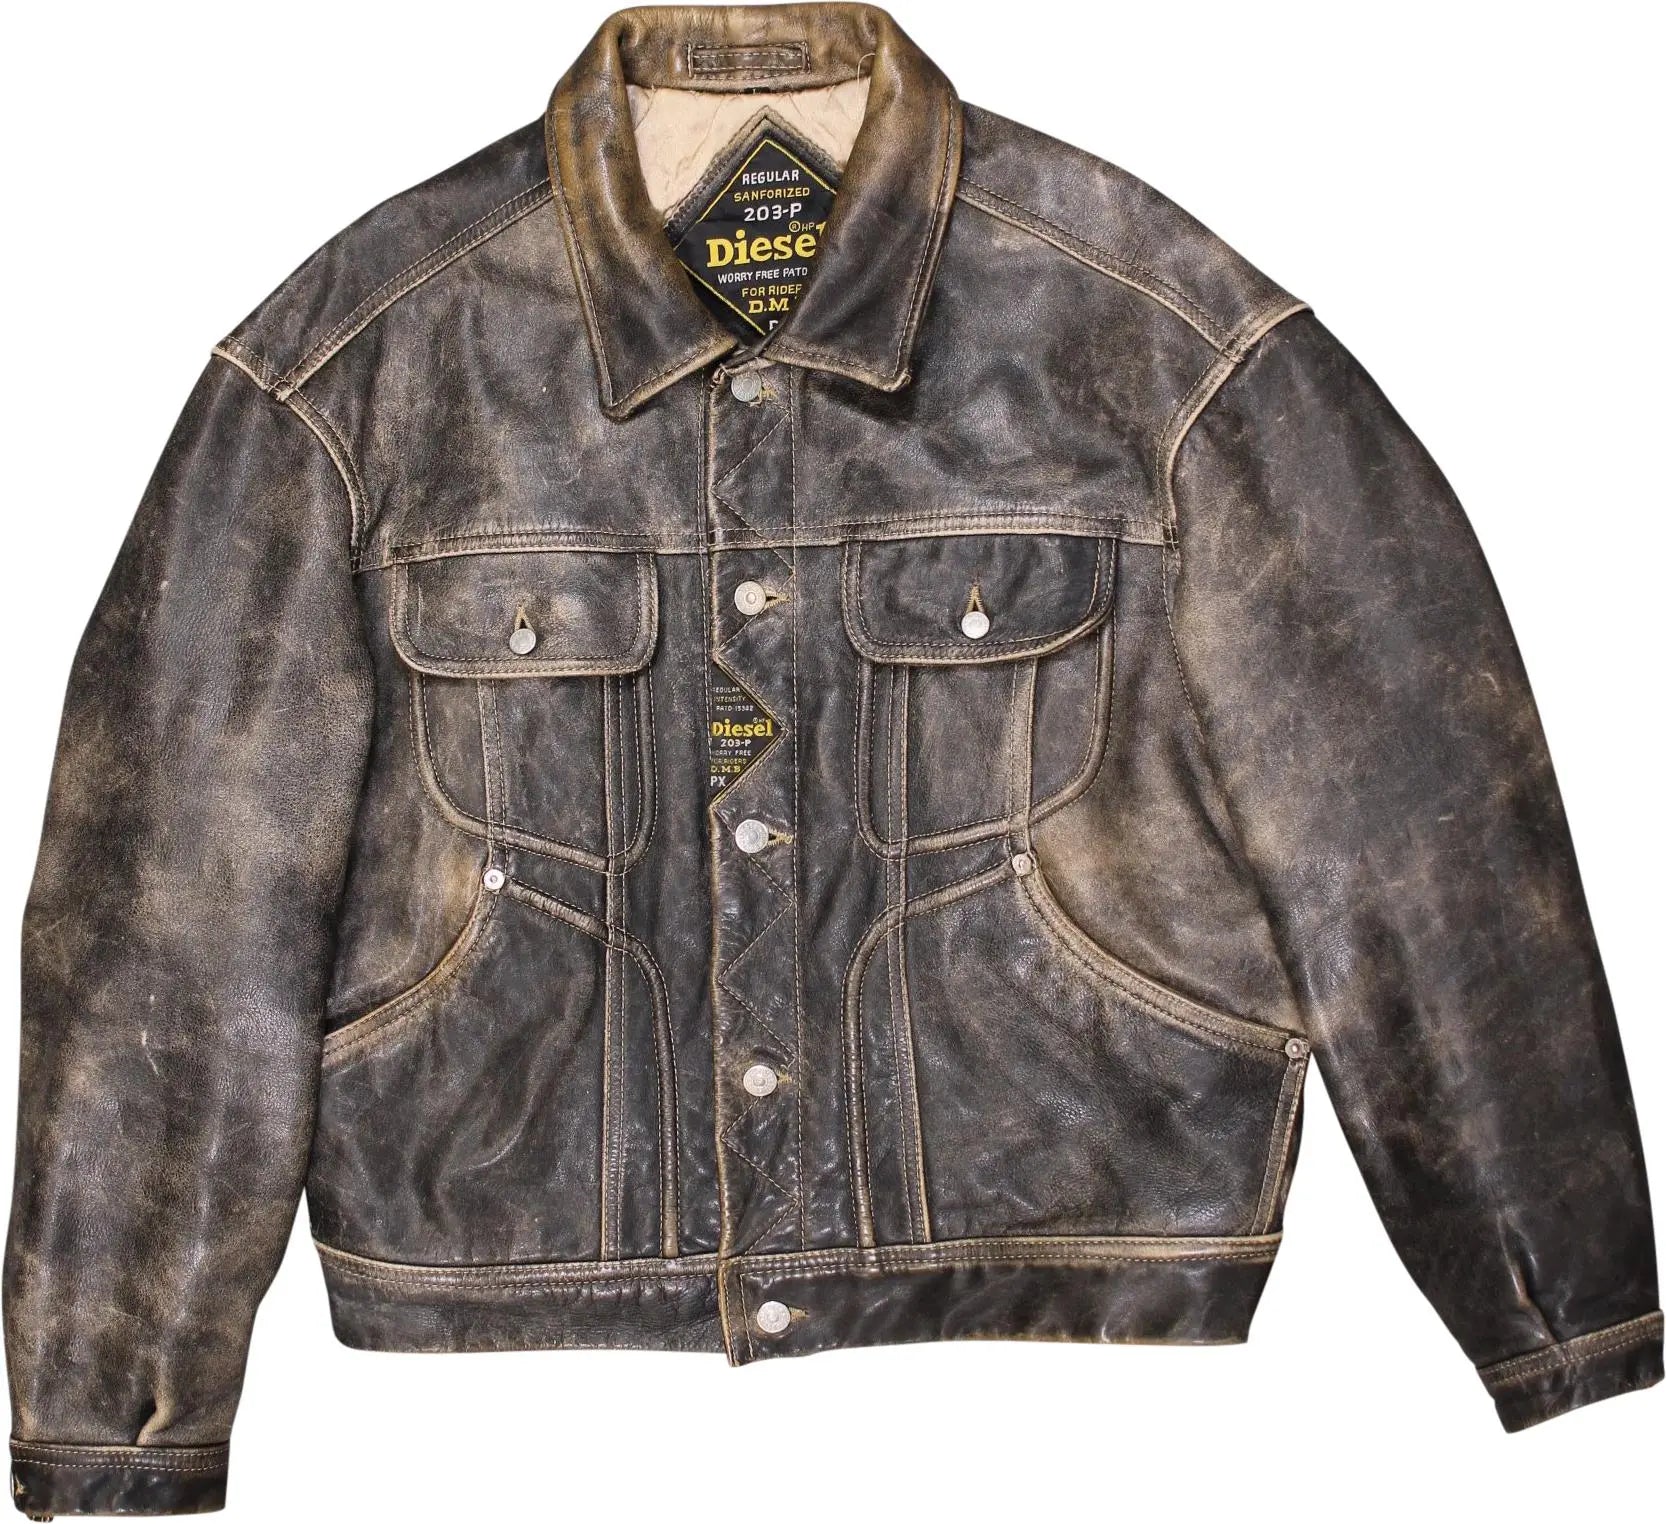 Diesel - Vintage Leather Jacket by Diesel- ThriftTale.com - Vintage and second handclothing